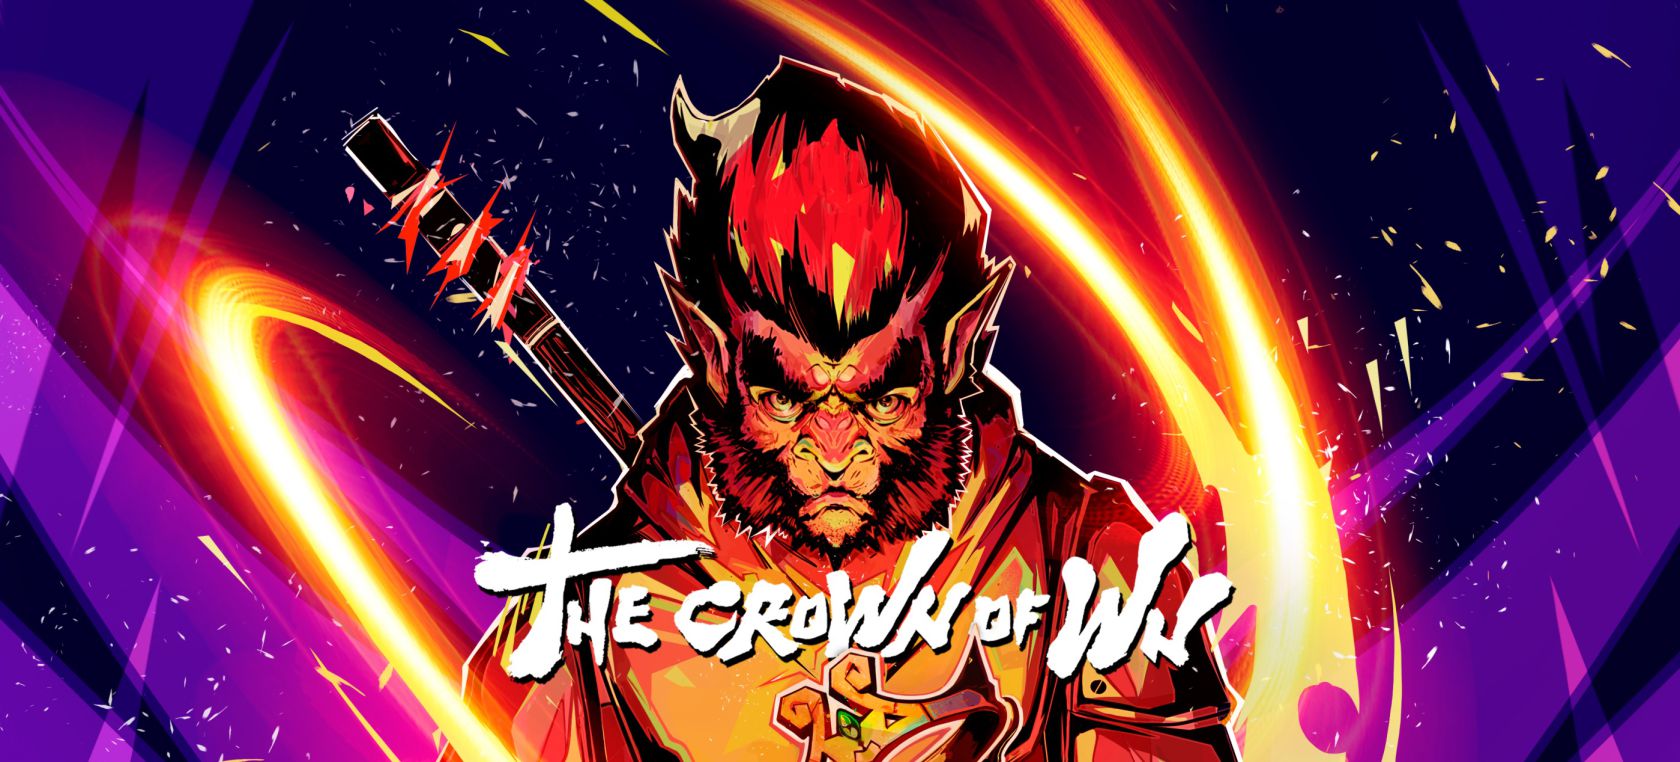 The crown of Wu